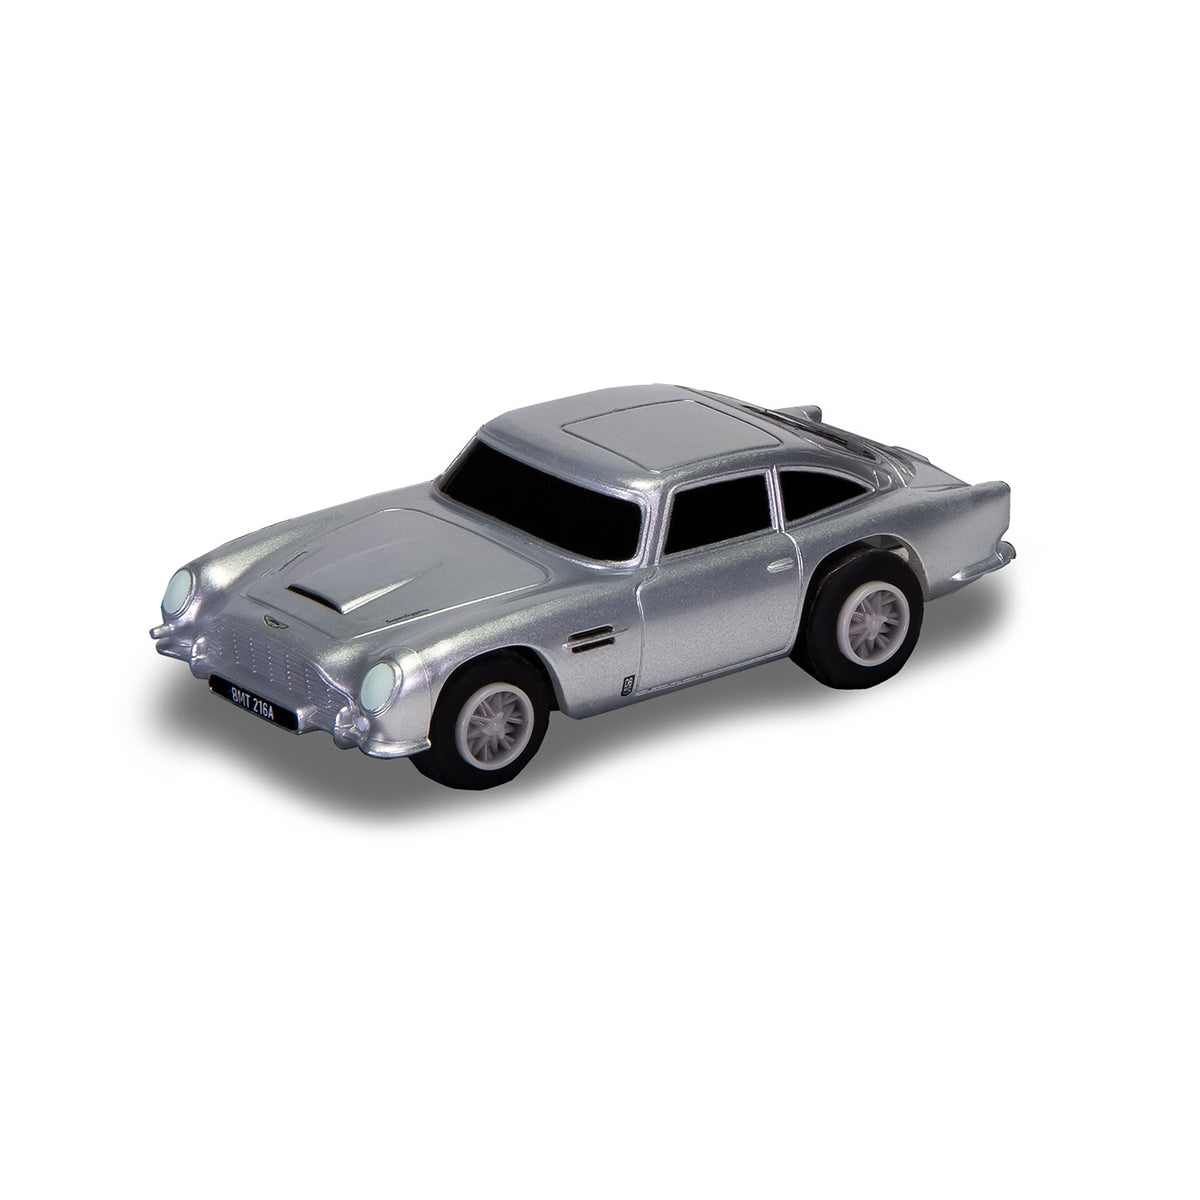 Scalextric James Bond Aston Martin DB5 Micro Slot Car – Goldfinger Edition